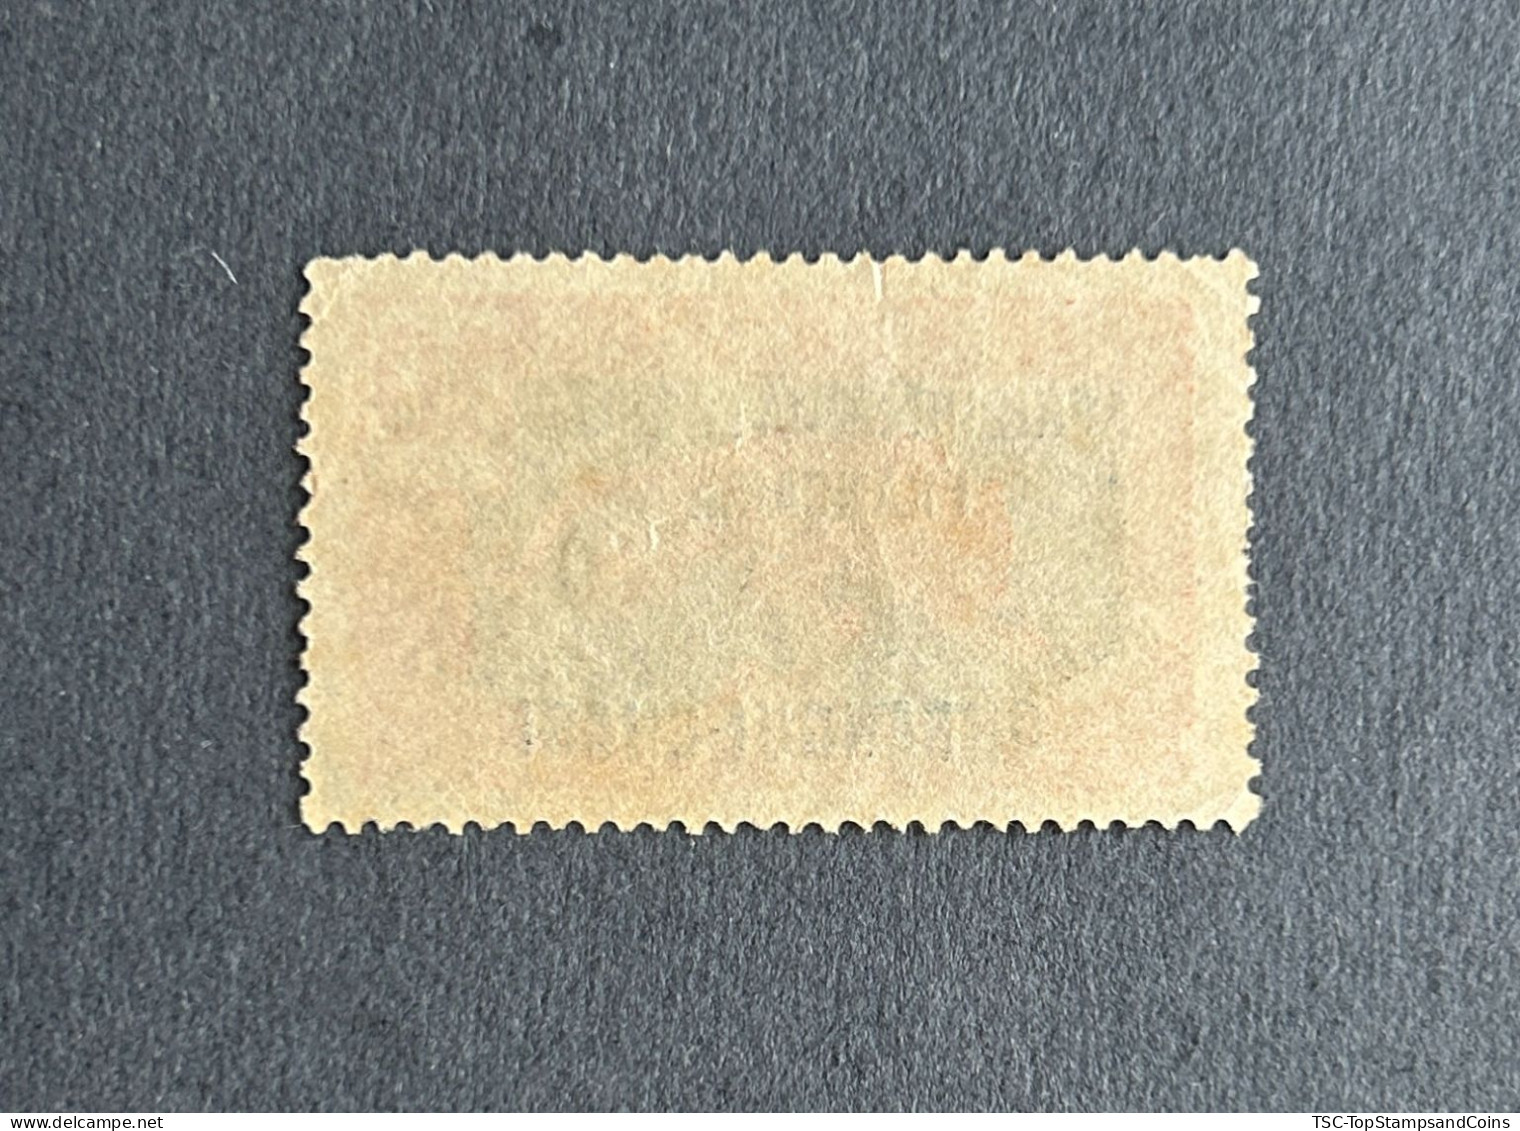 FRAOUB063U - Leopard - Overprinted AEF - Oubangui-Chari - 10 C Used Stamp - Oubangui-Chari - 1925 - Usati